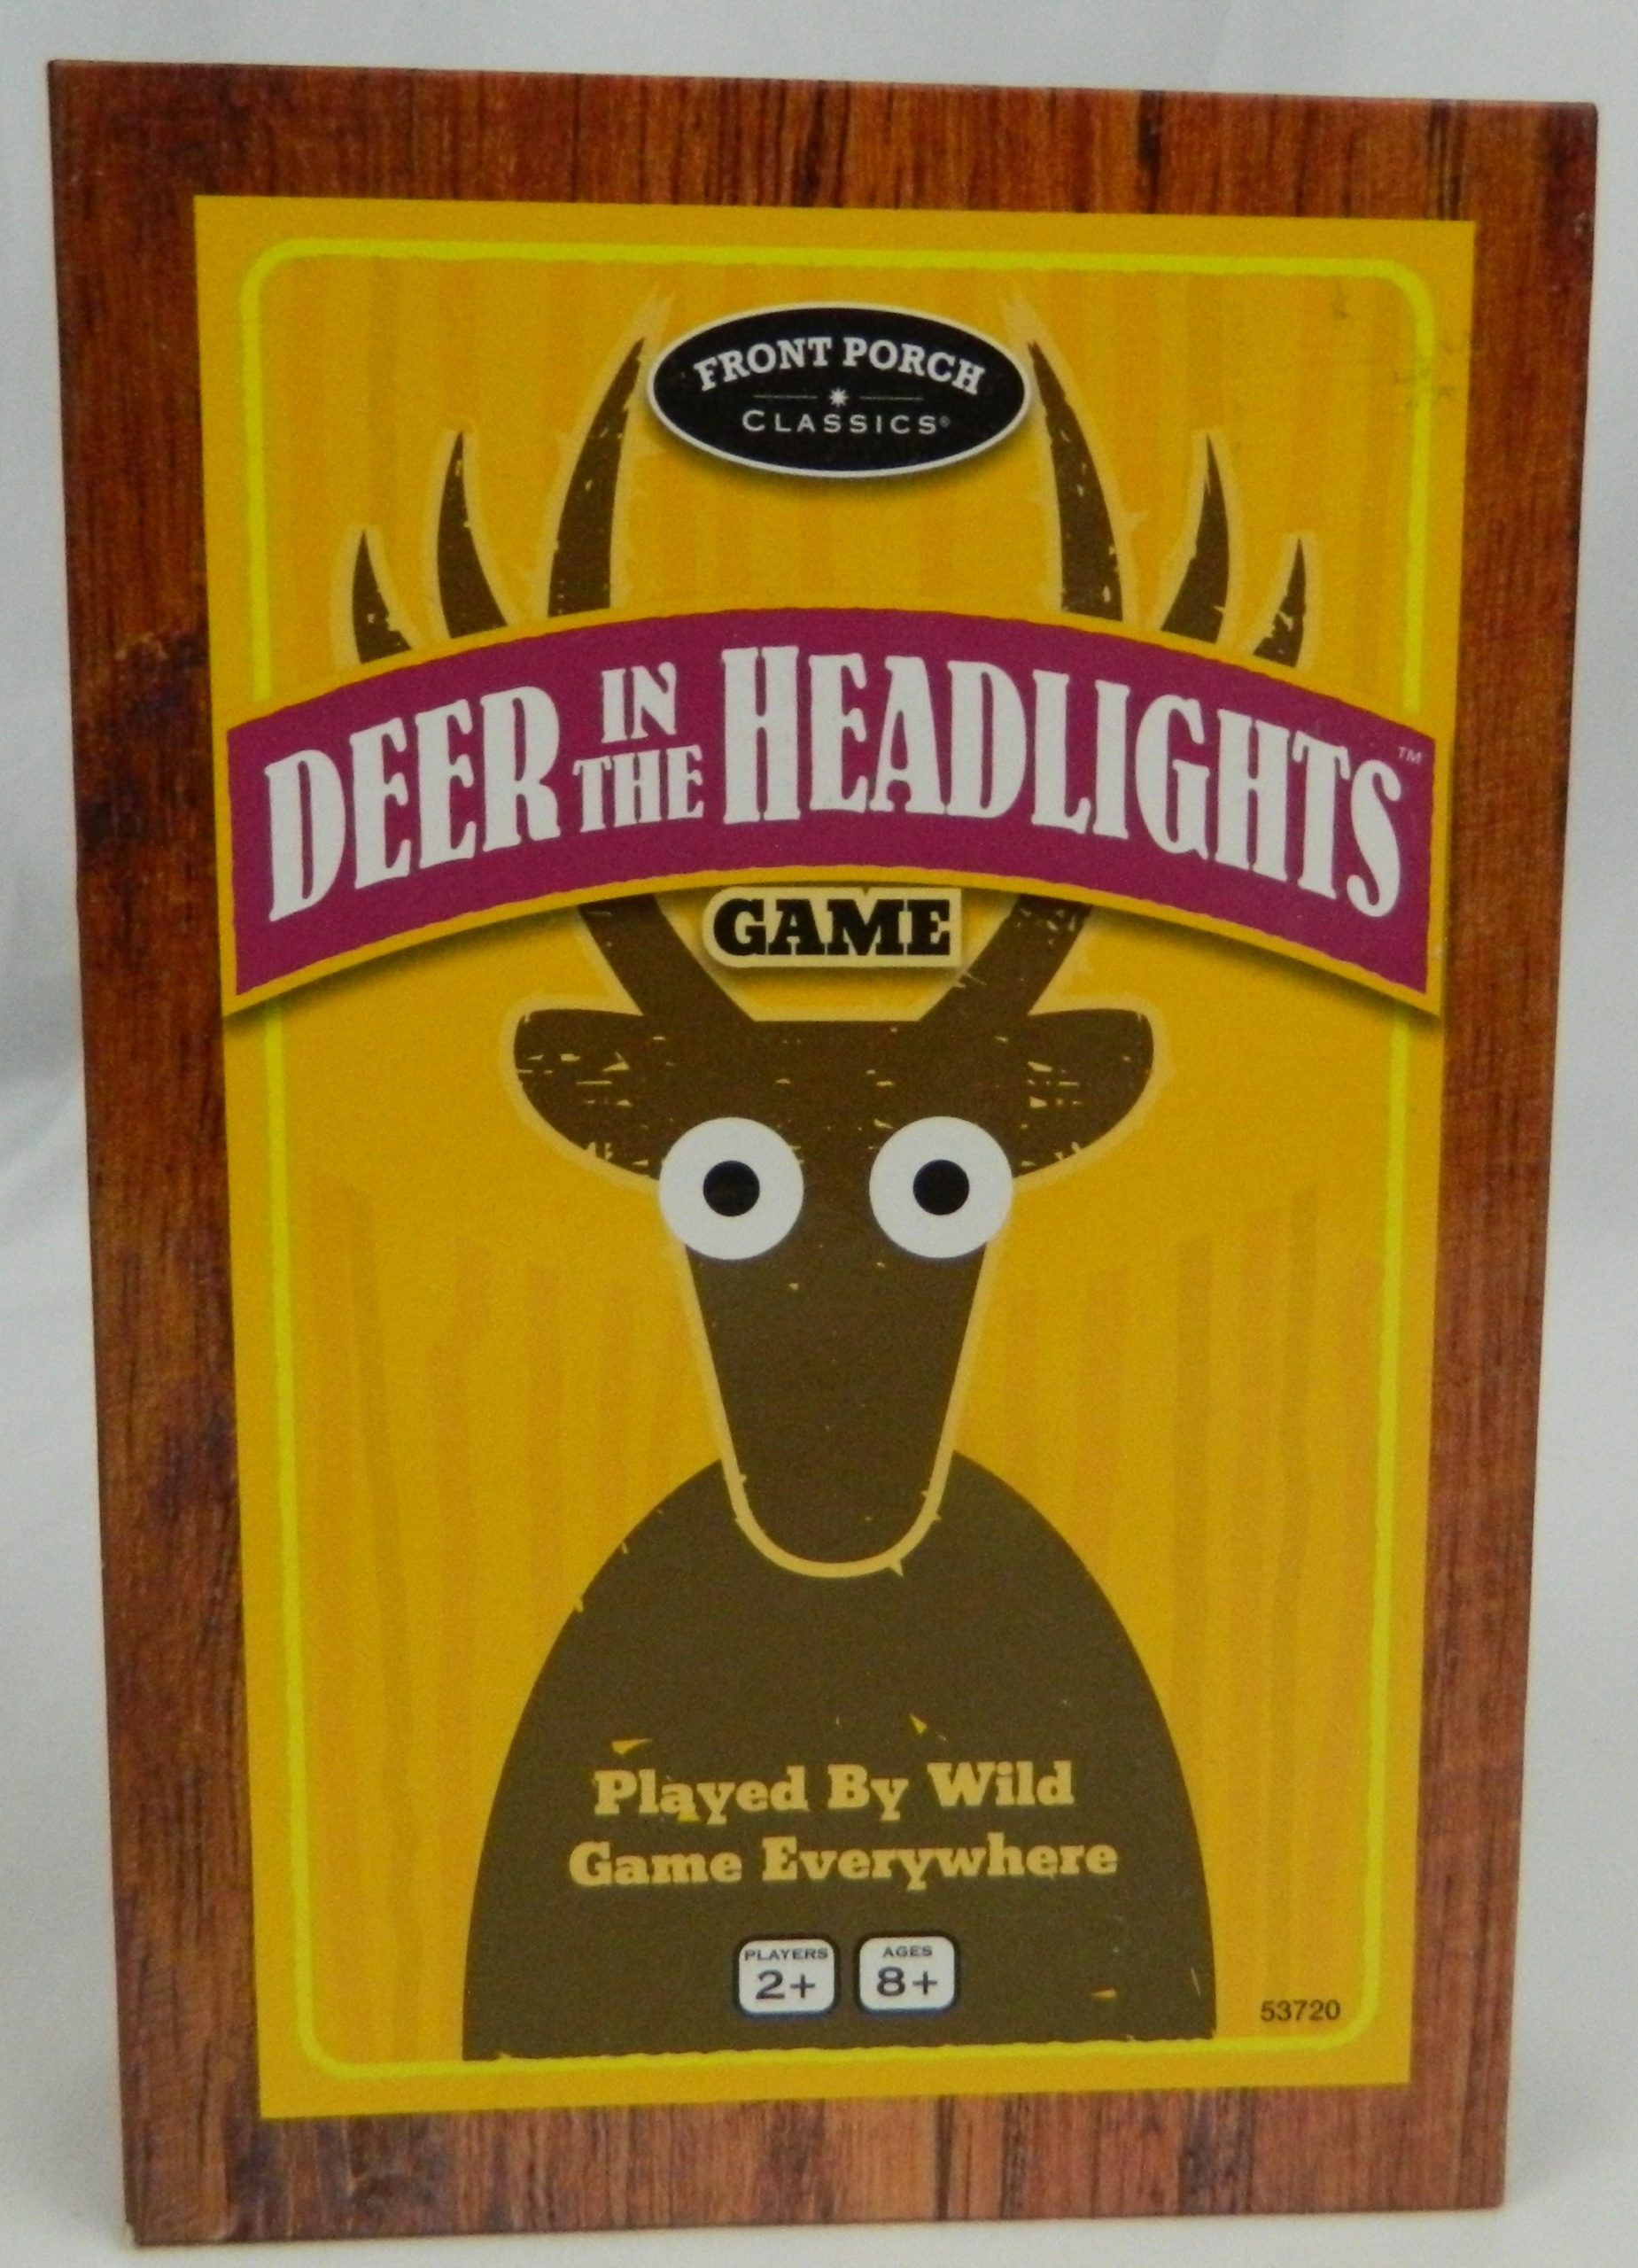 Box in Deer in the Headlights